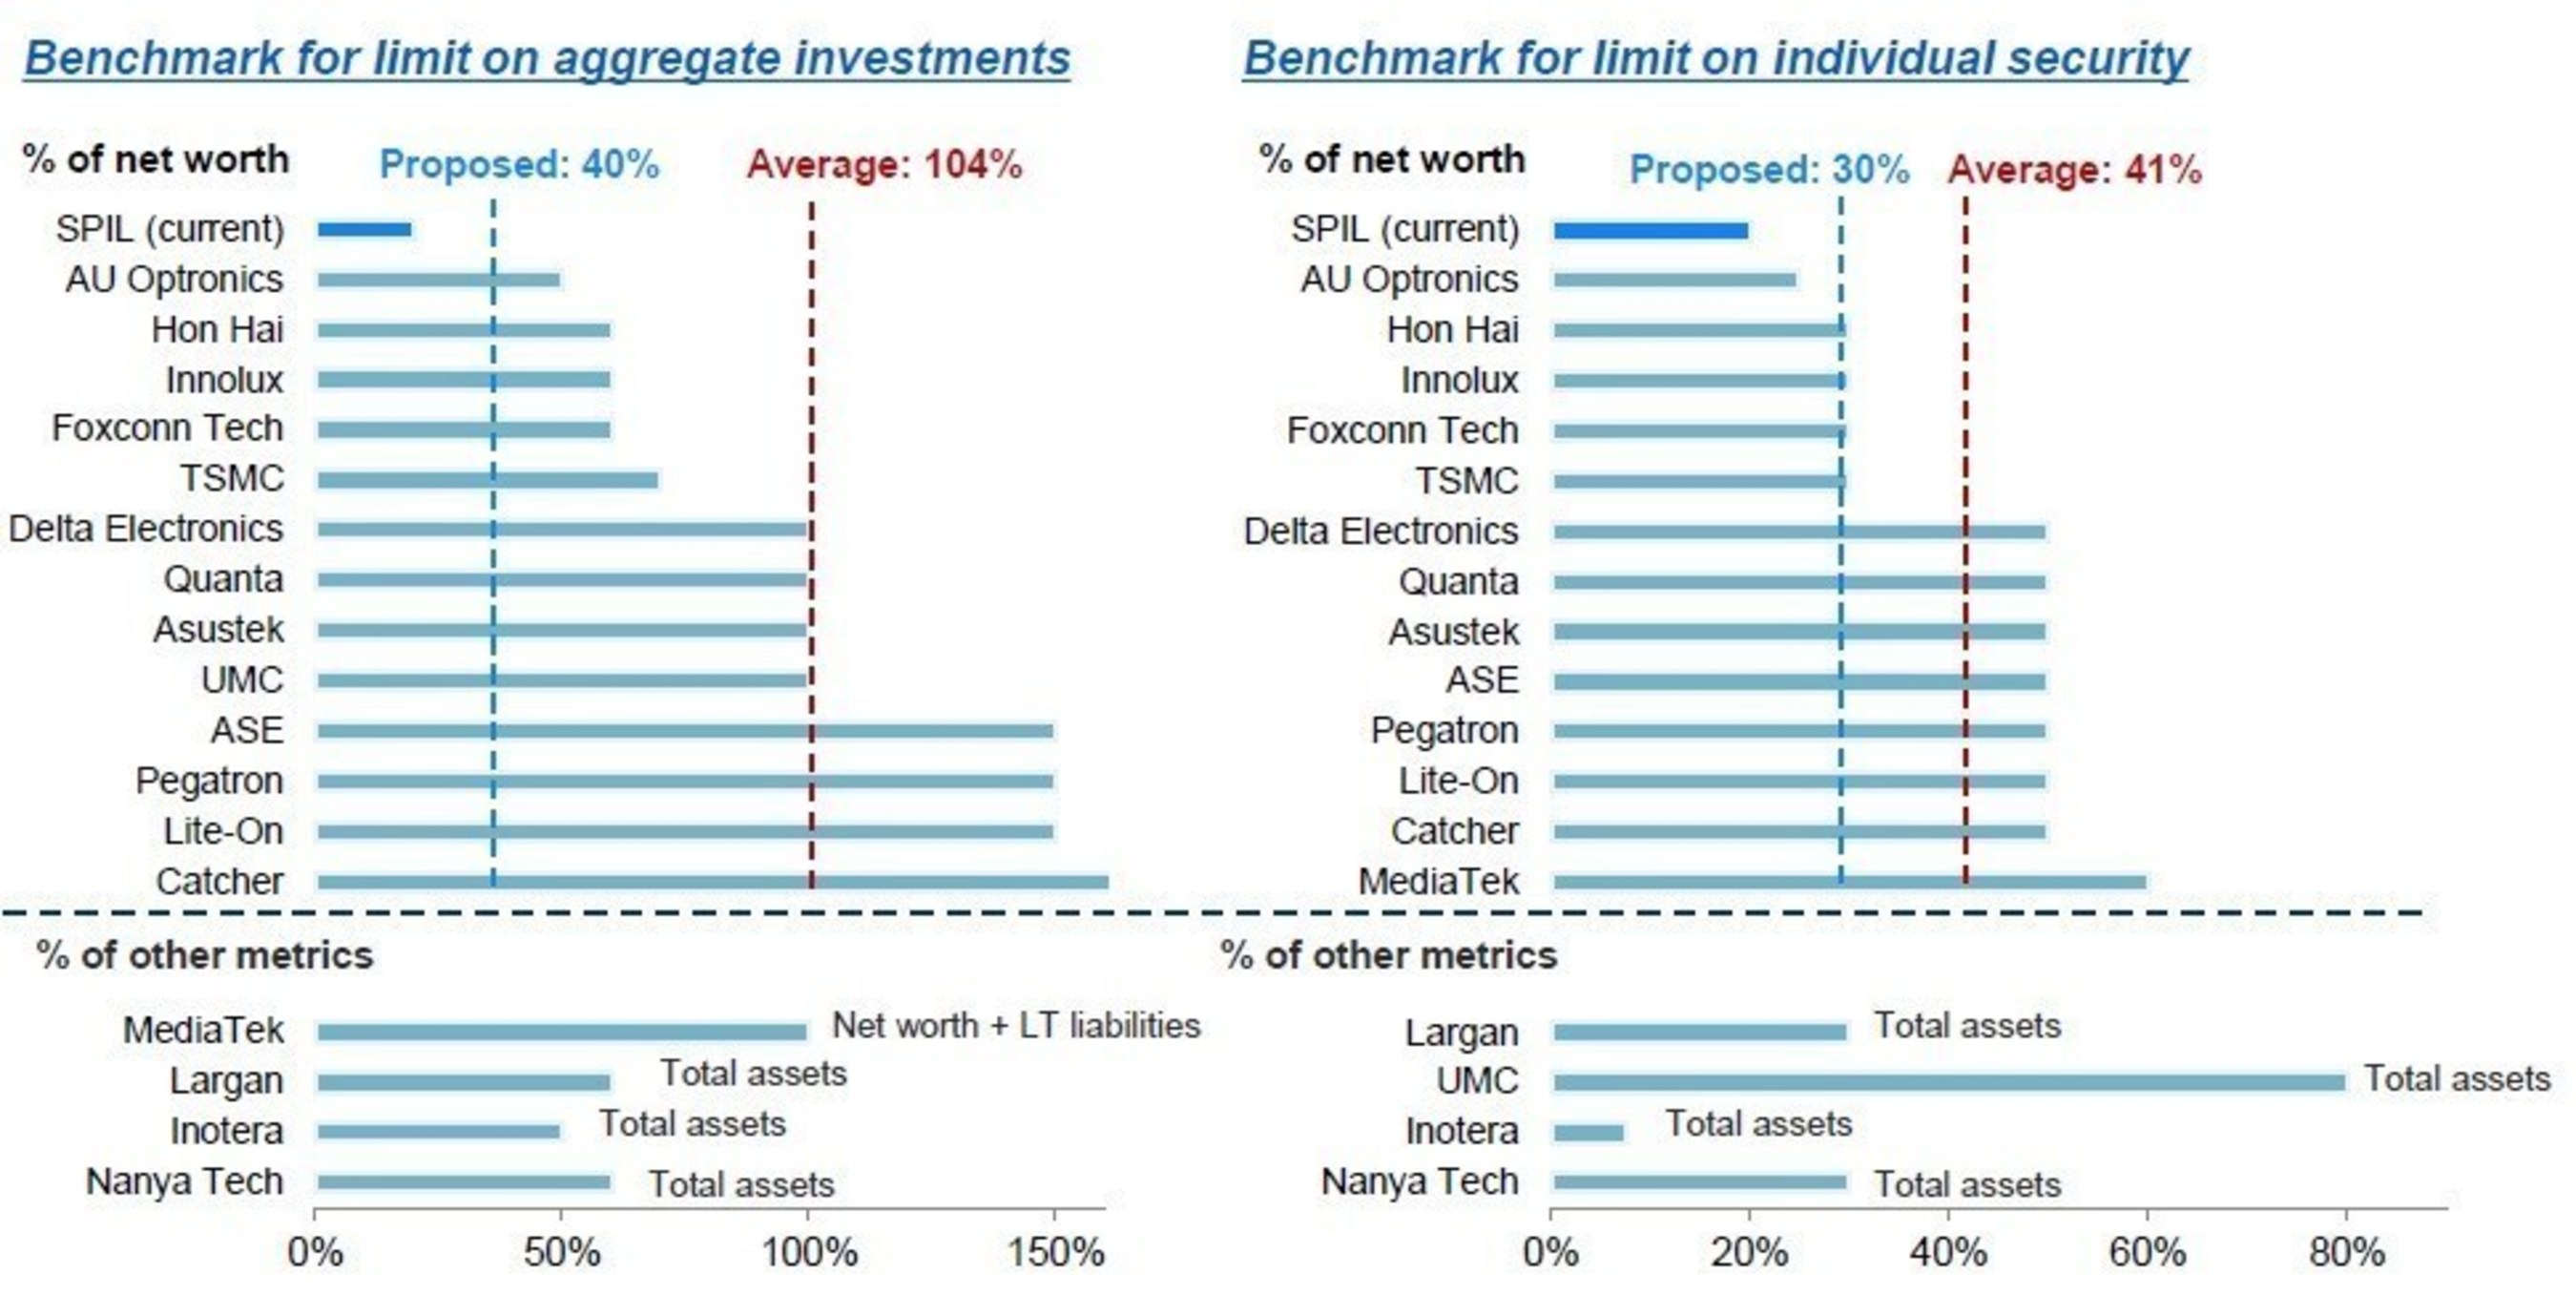 (Left) Benchmark for limit on aggregate investments; (Right) Benchmark for limit on individual security